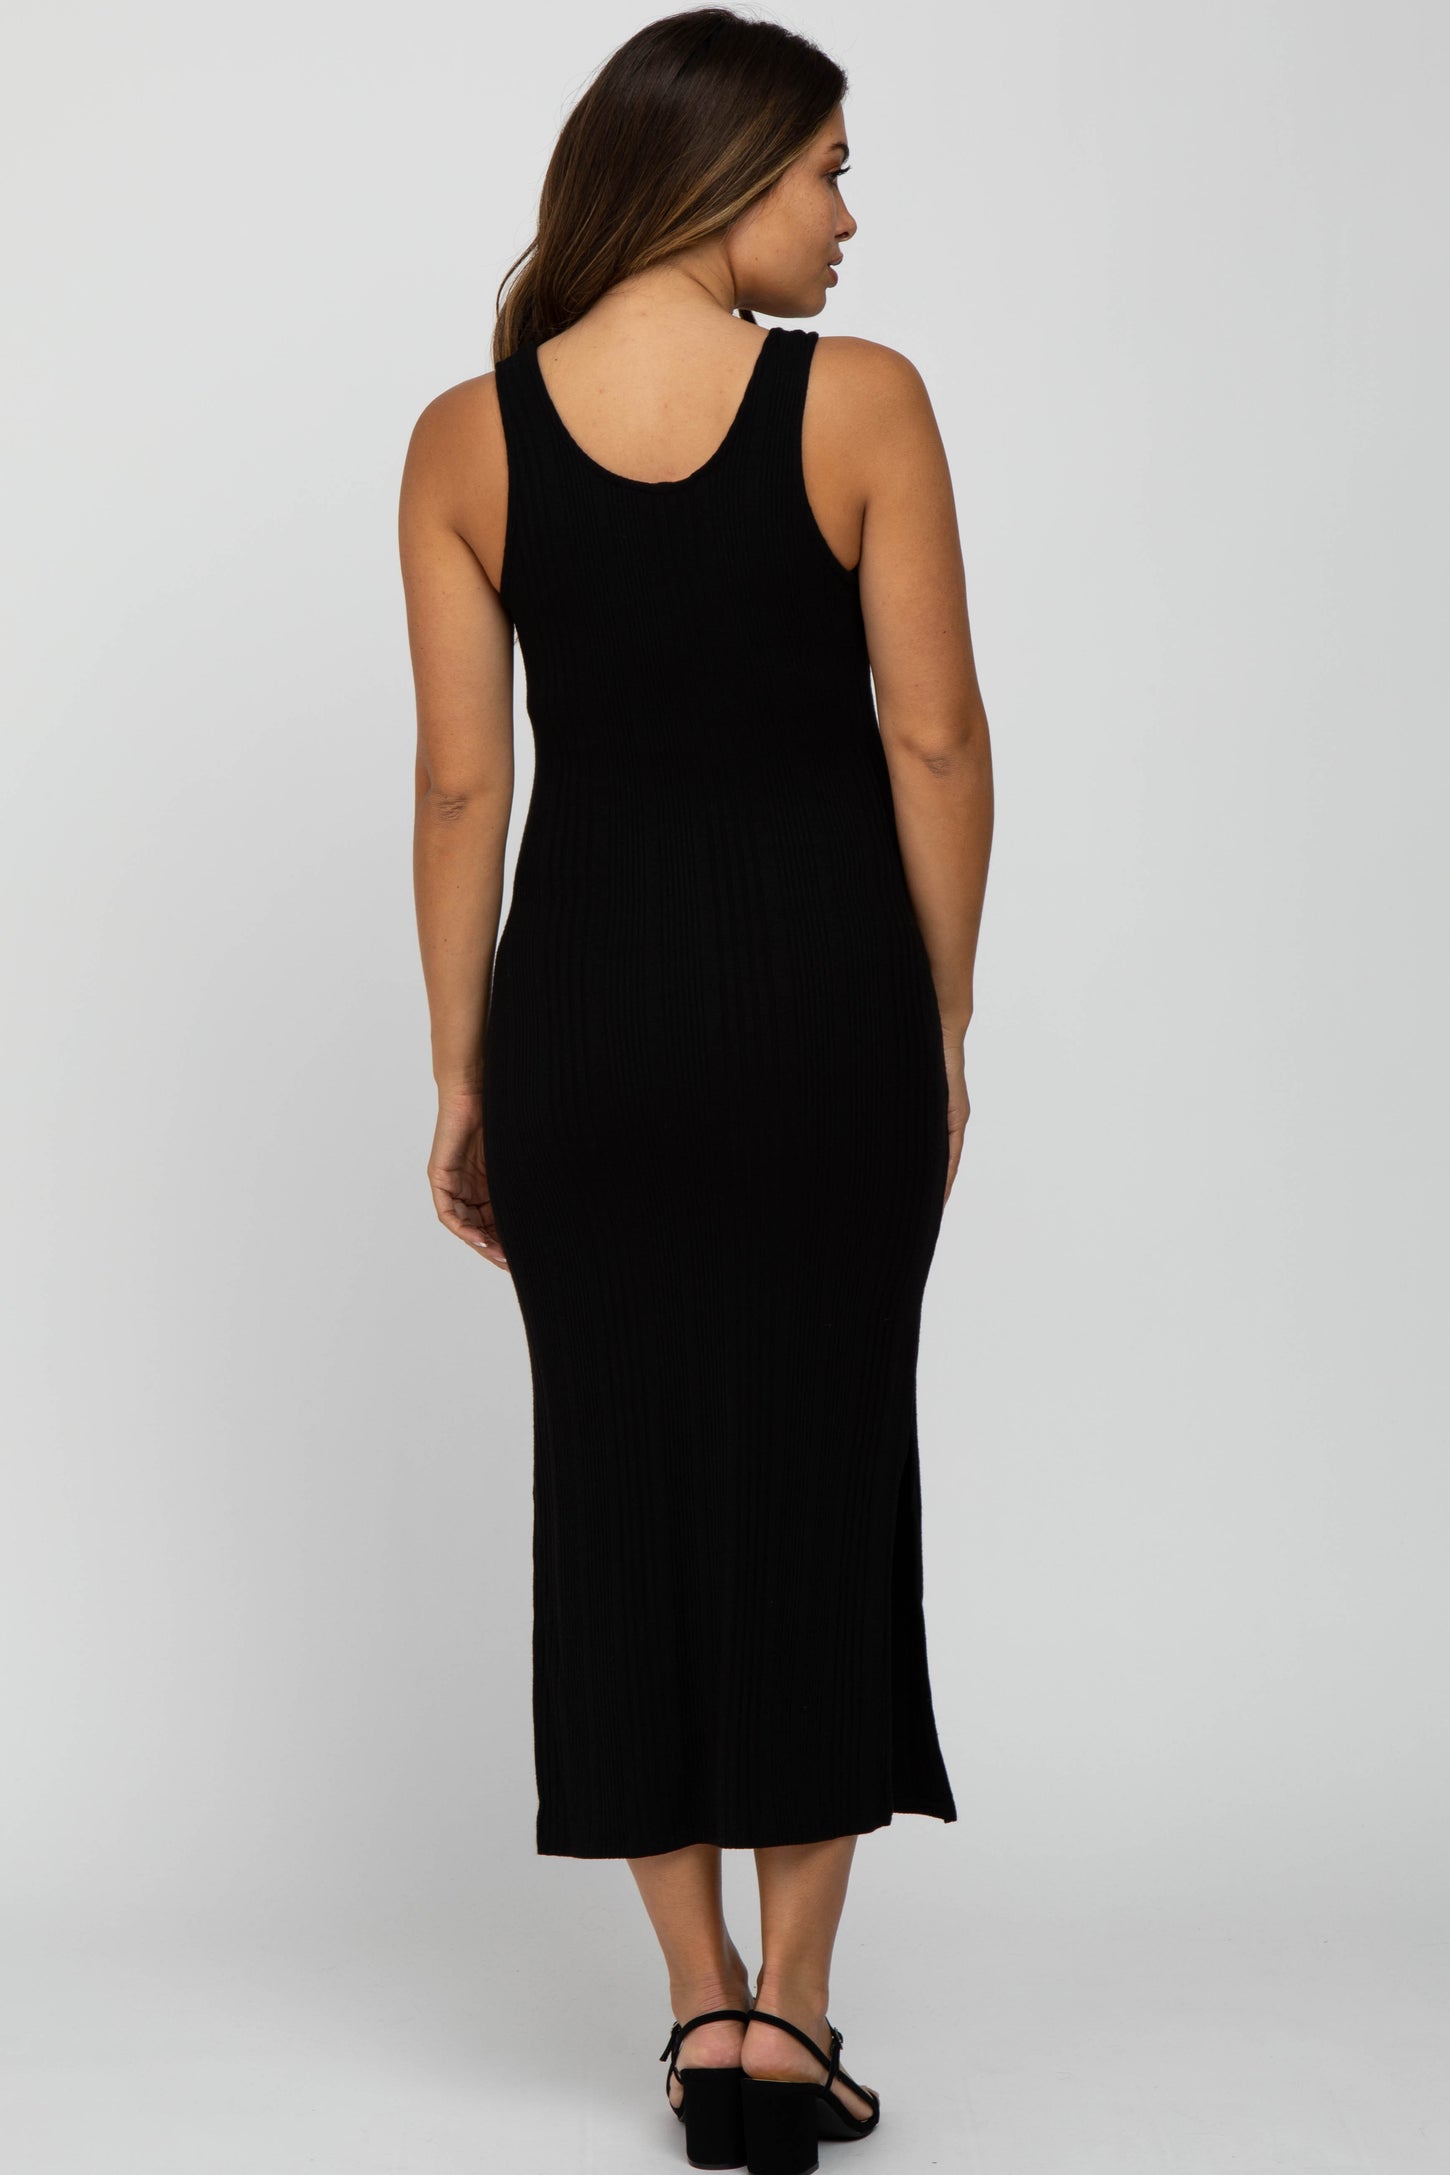 Black Sleeveless Ribbed Side Slit Maternity Dress